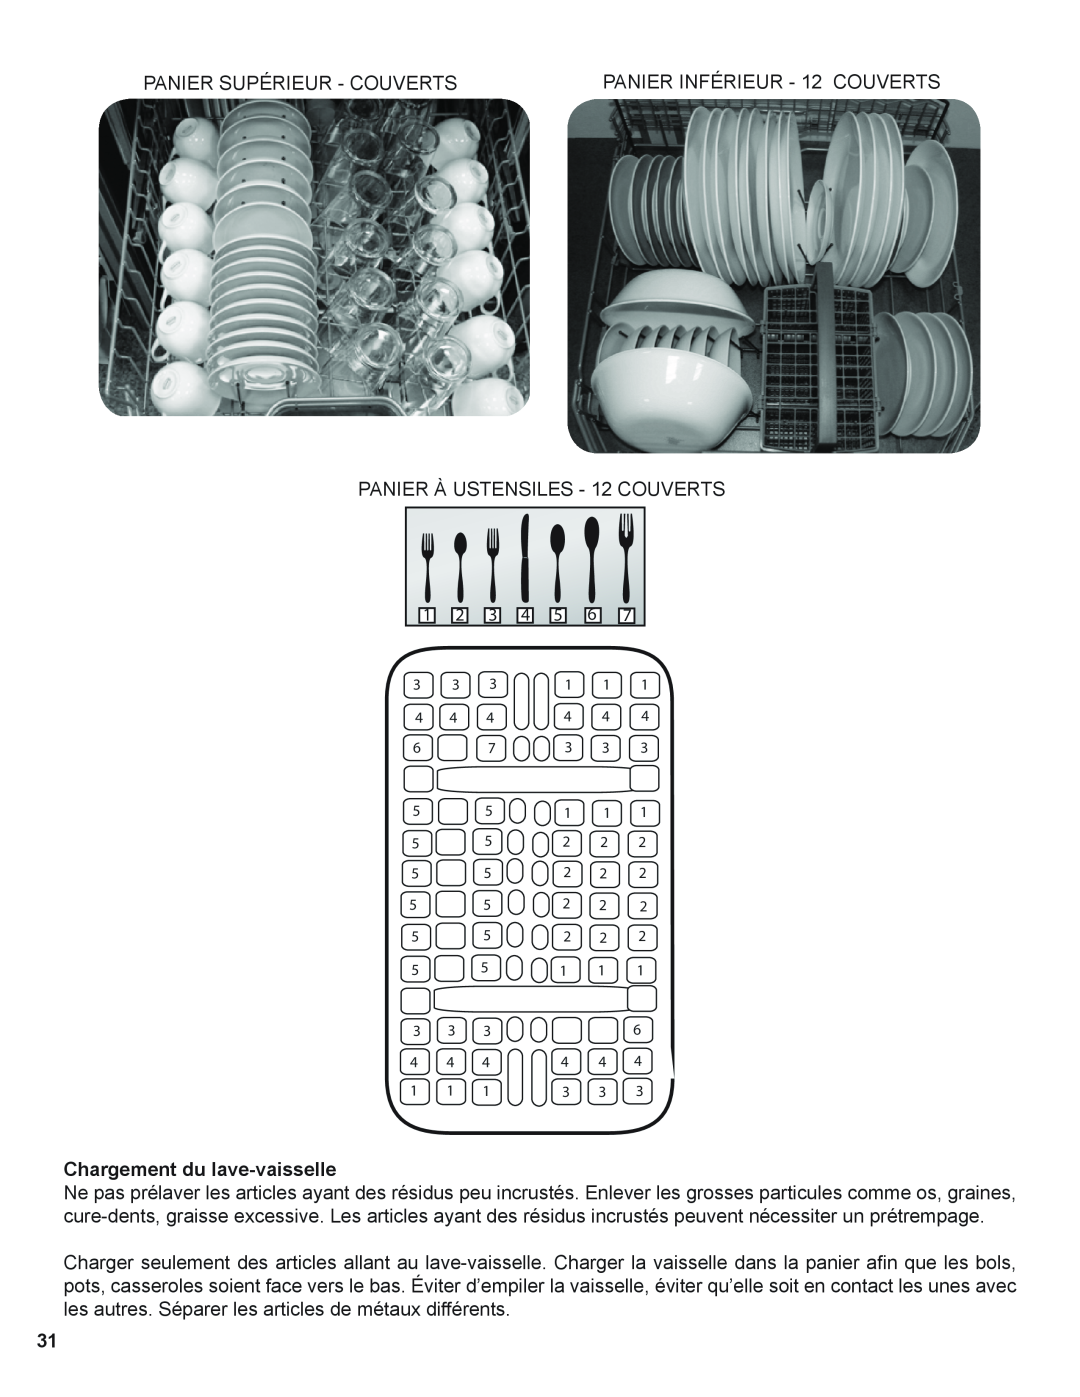 Thermador Dishwasher manual Chargement du lave-vaisselle 